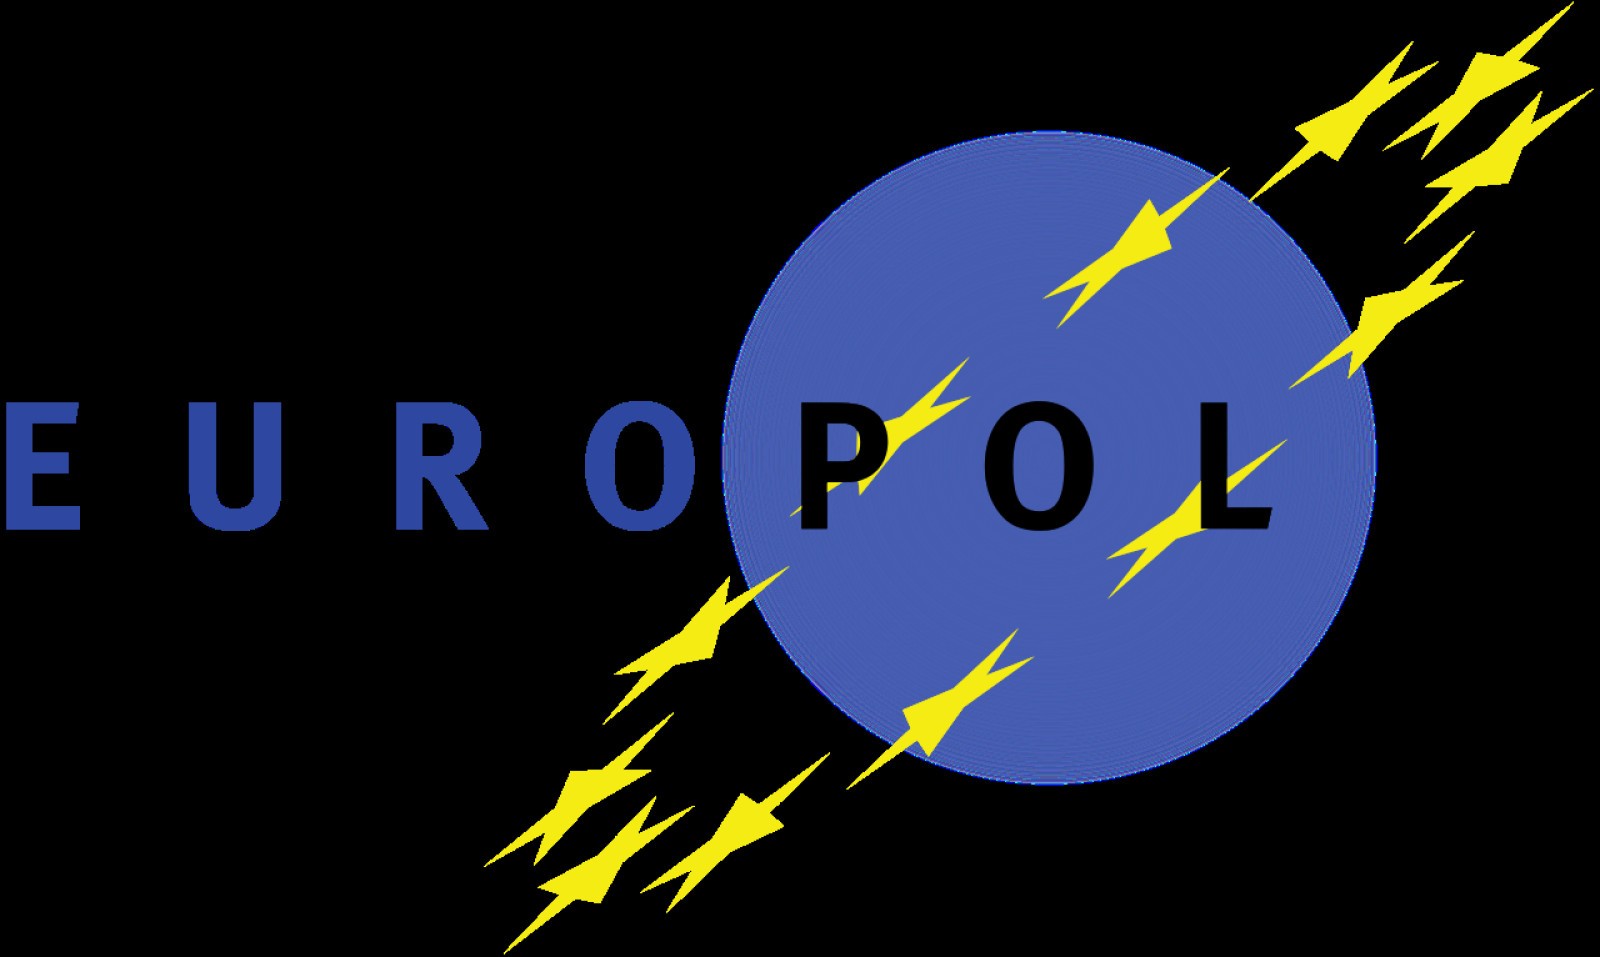 dinosaur Obsession Troubled Europol, despre cel mai mare atac cibernetic din istorie